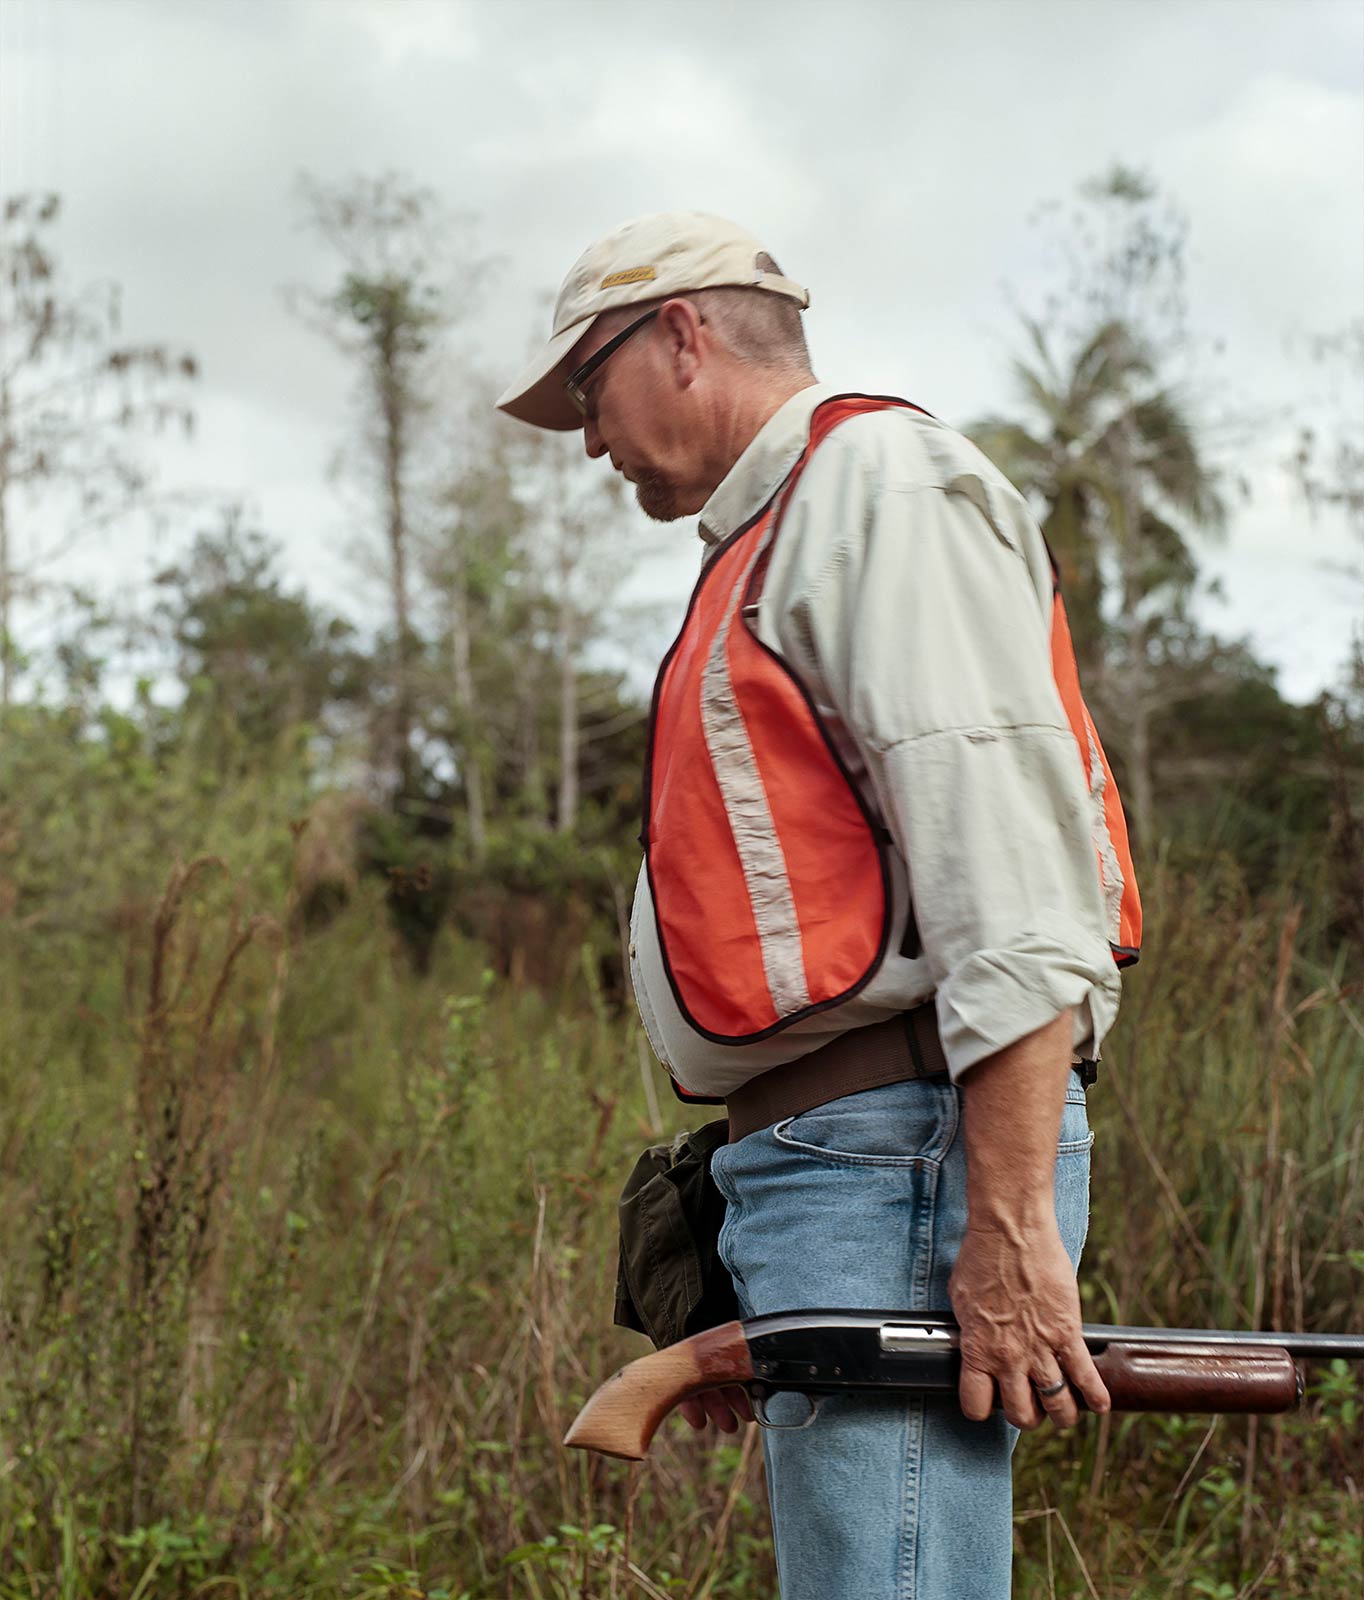 Hunting invasive Burmese python in Southern Florida Everglades. Documentary photos shot on Kodak film